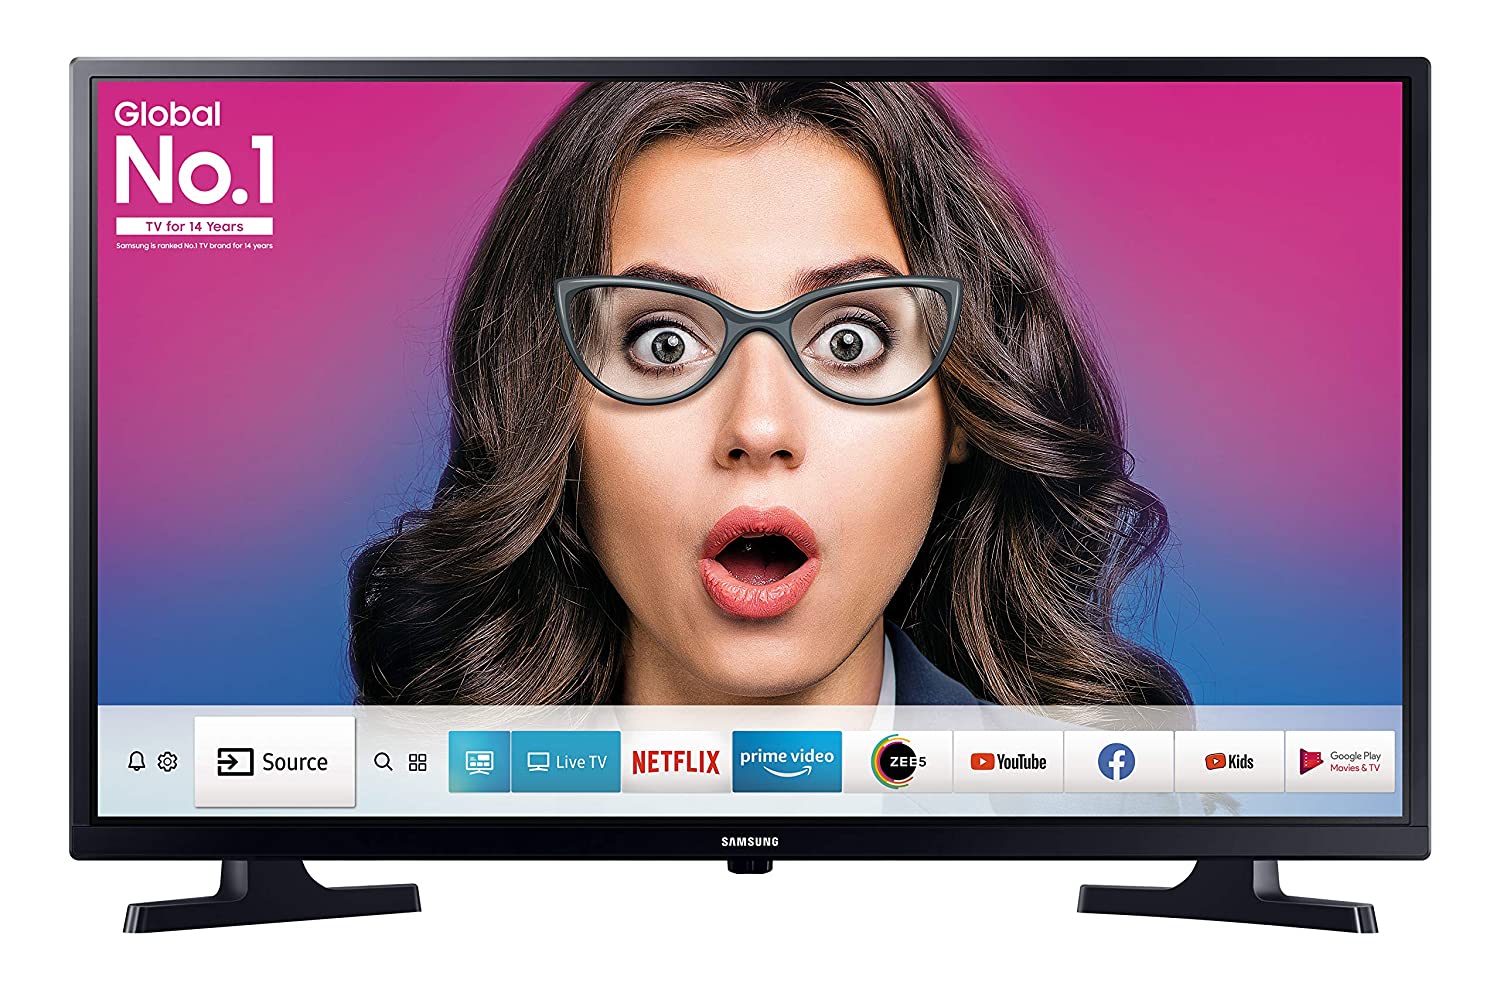 Samsung 80 cm (32 inches) HD Ready Smart LED TV UA32T4350AKXXL (Glossy